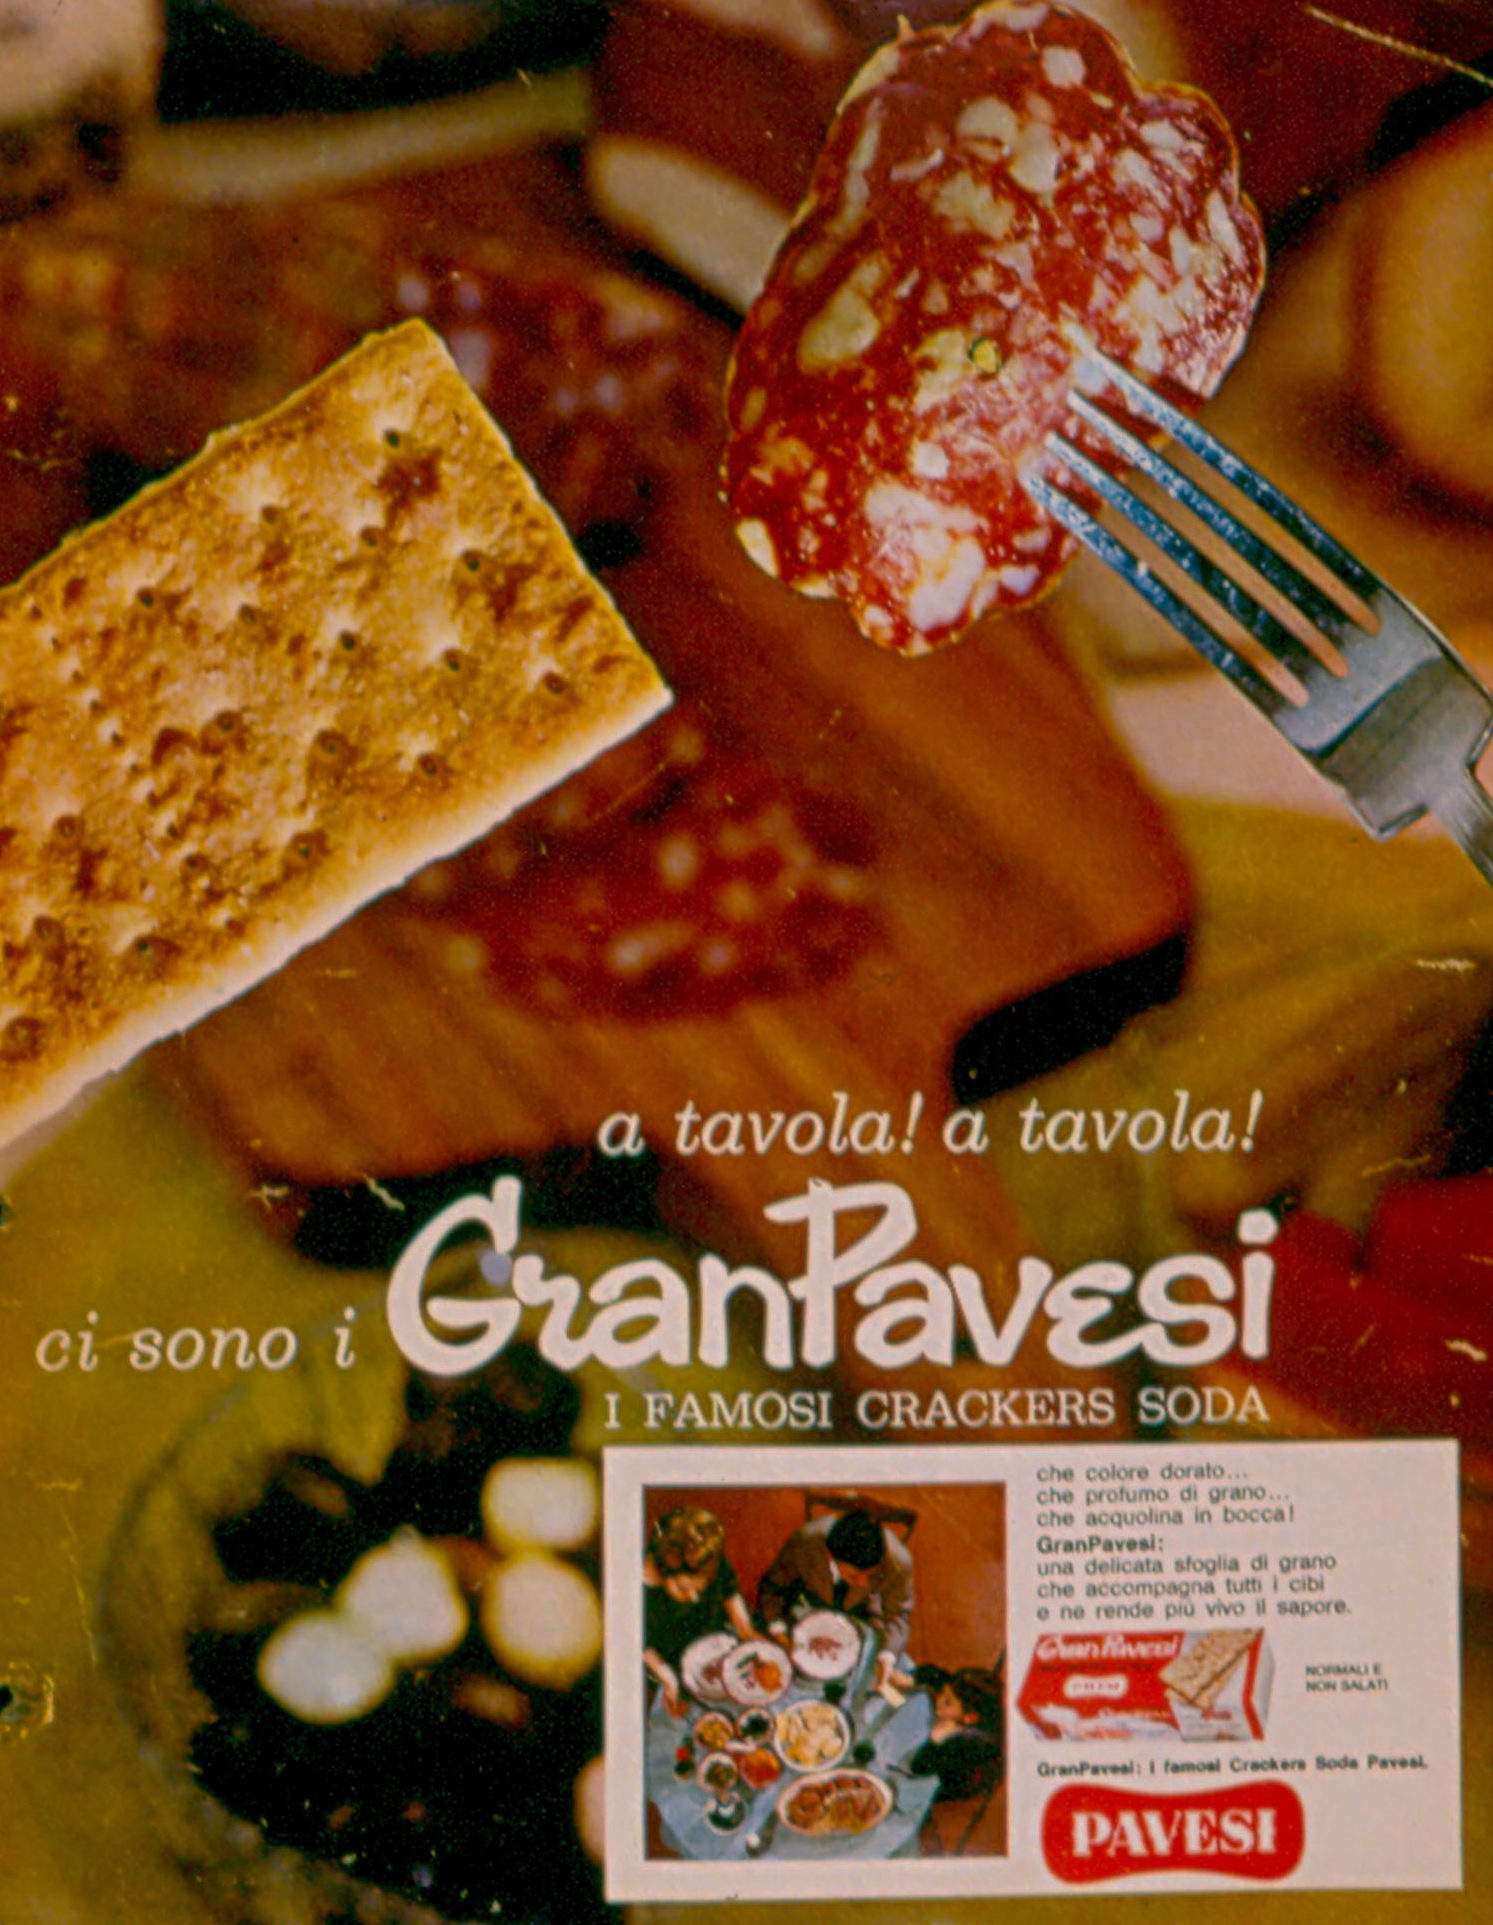 Press advertising Gran Pavesi Crackers, 1964